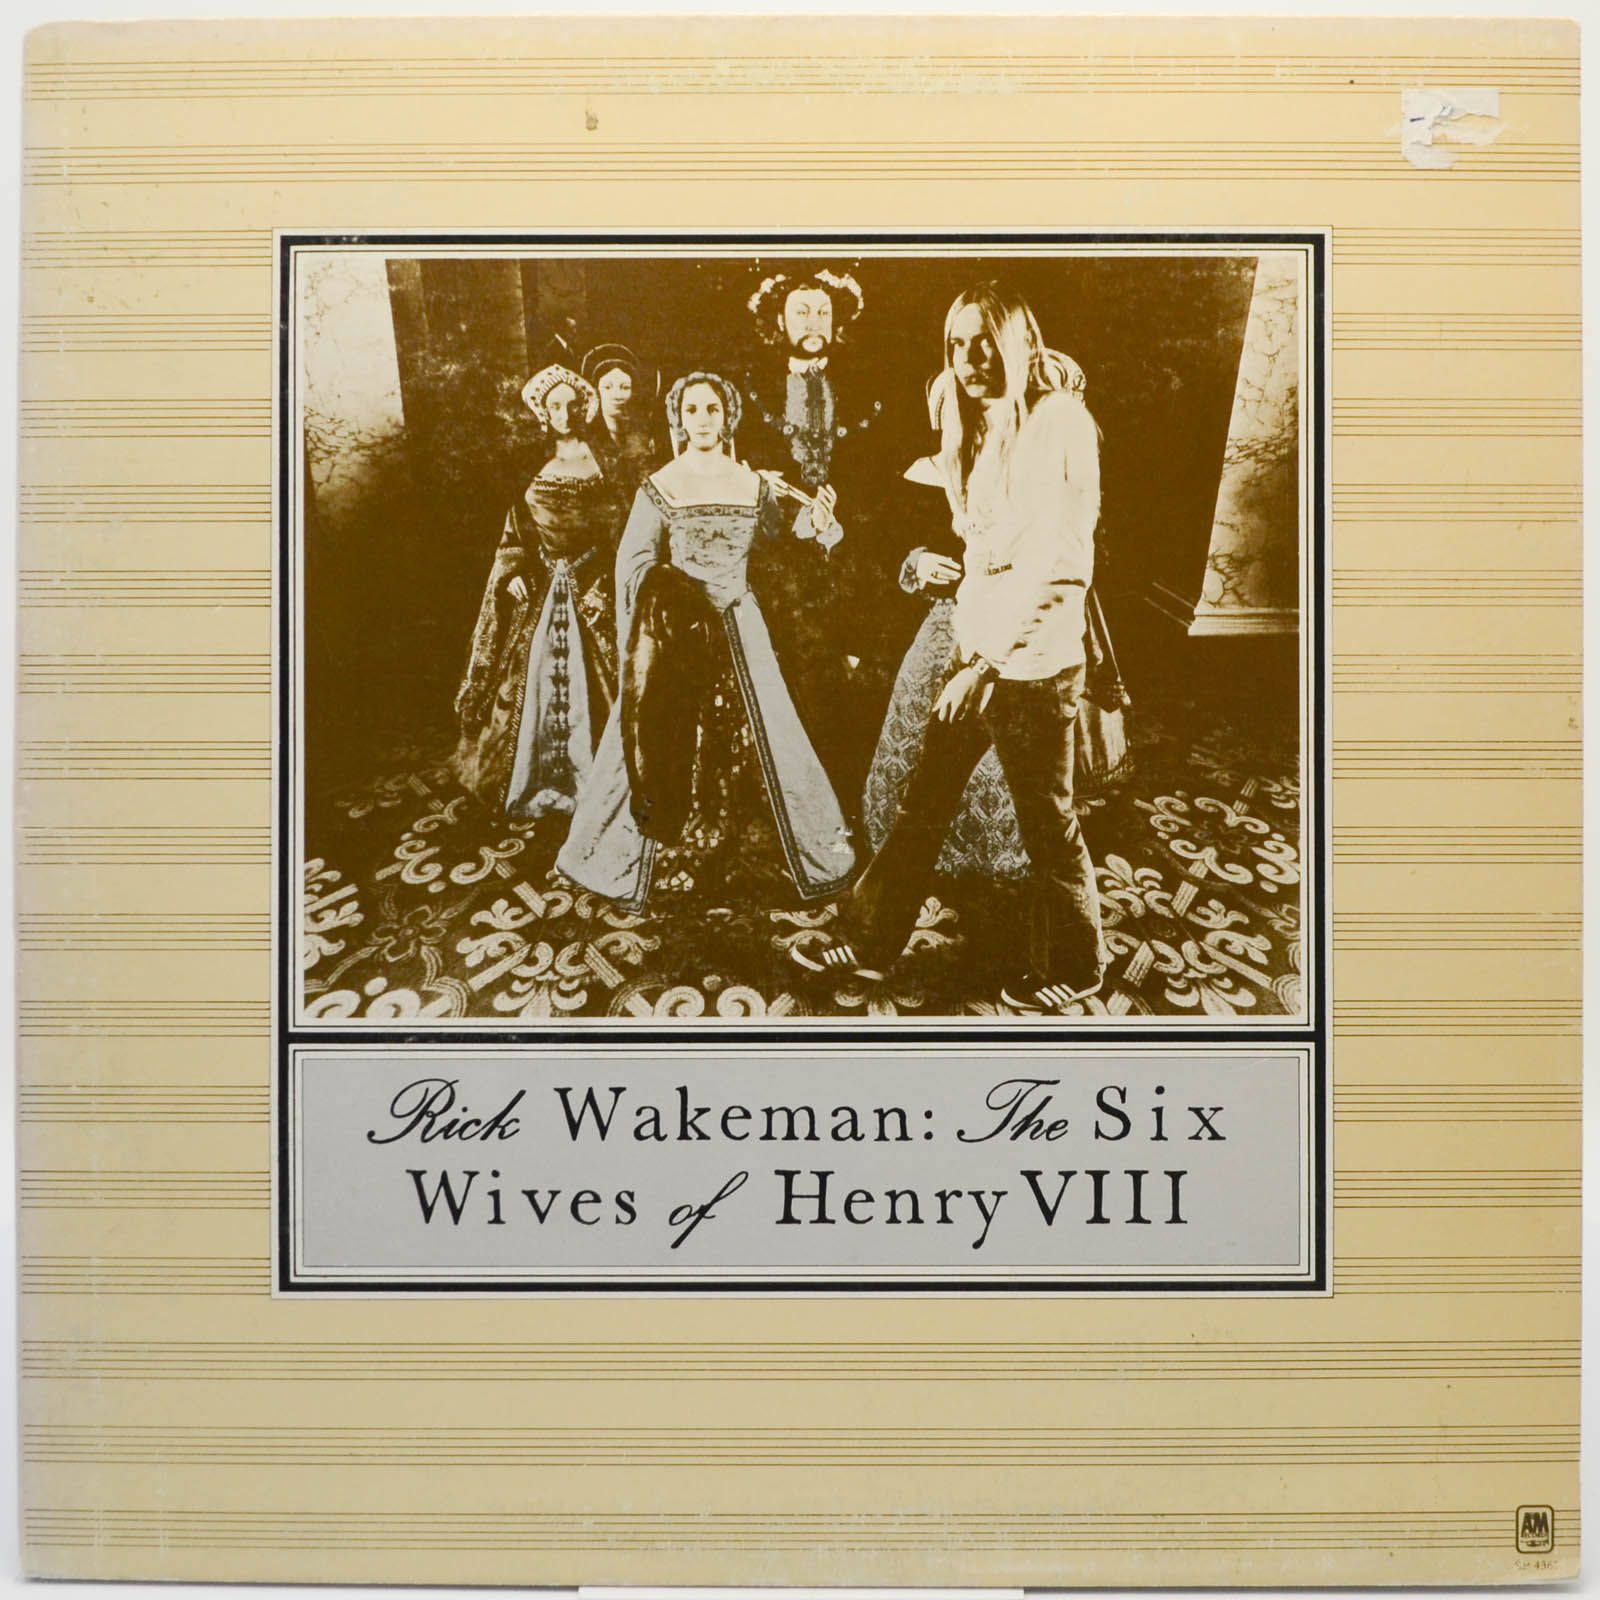 Rick Wakeman — The Six Wives Of Henry VIII, 1973